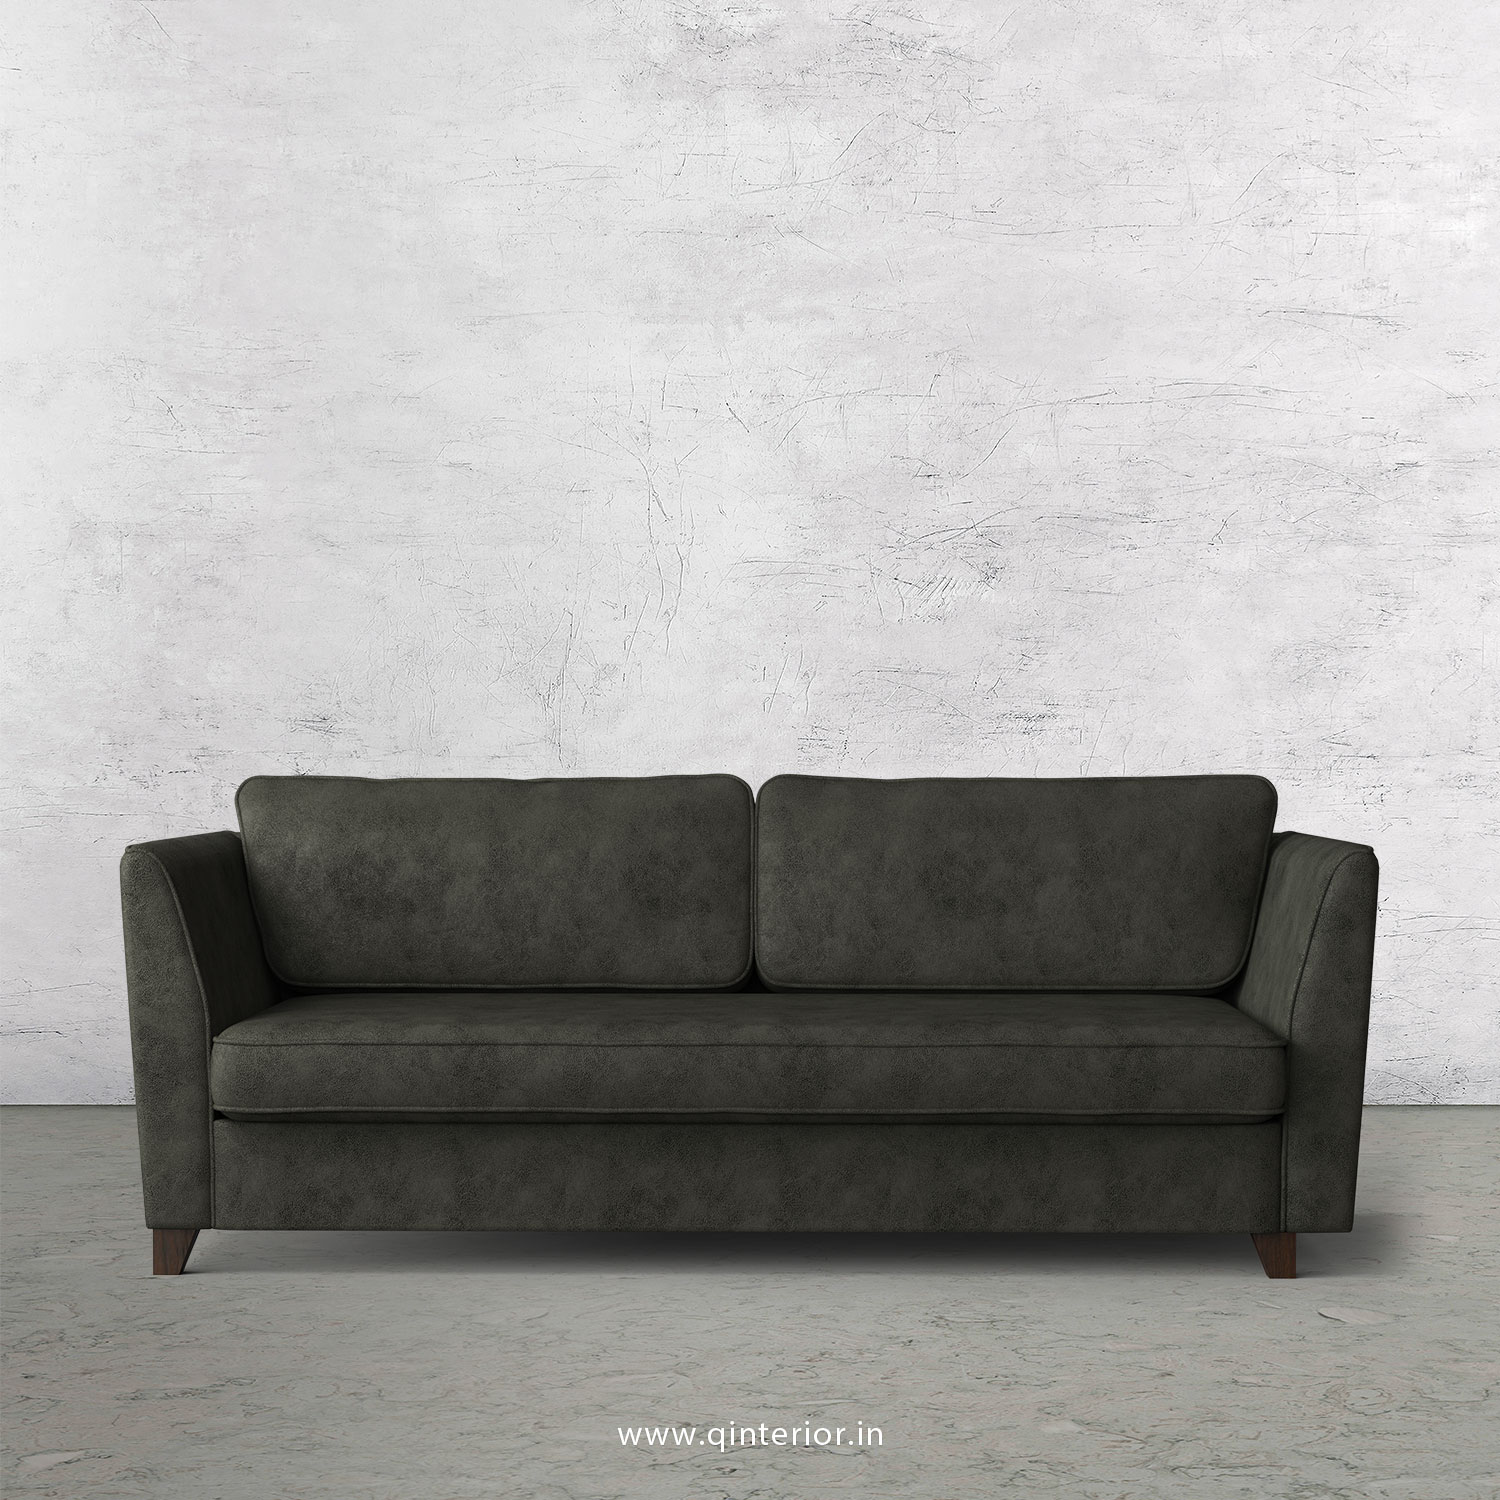 KINGSTONE 3 Seater Sofa in Fab Leather Fabric - SFA004 FL07